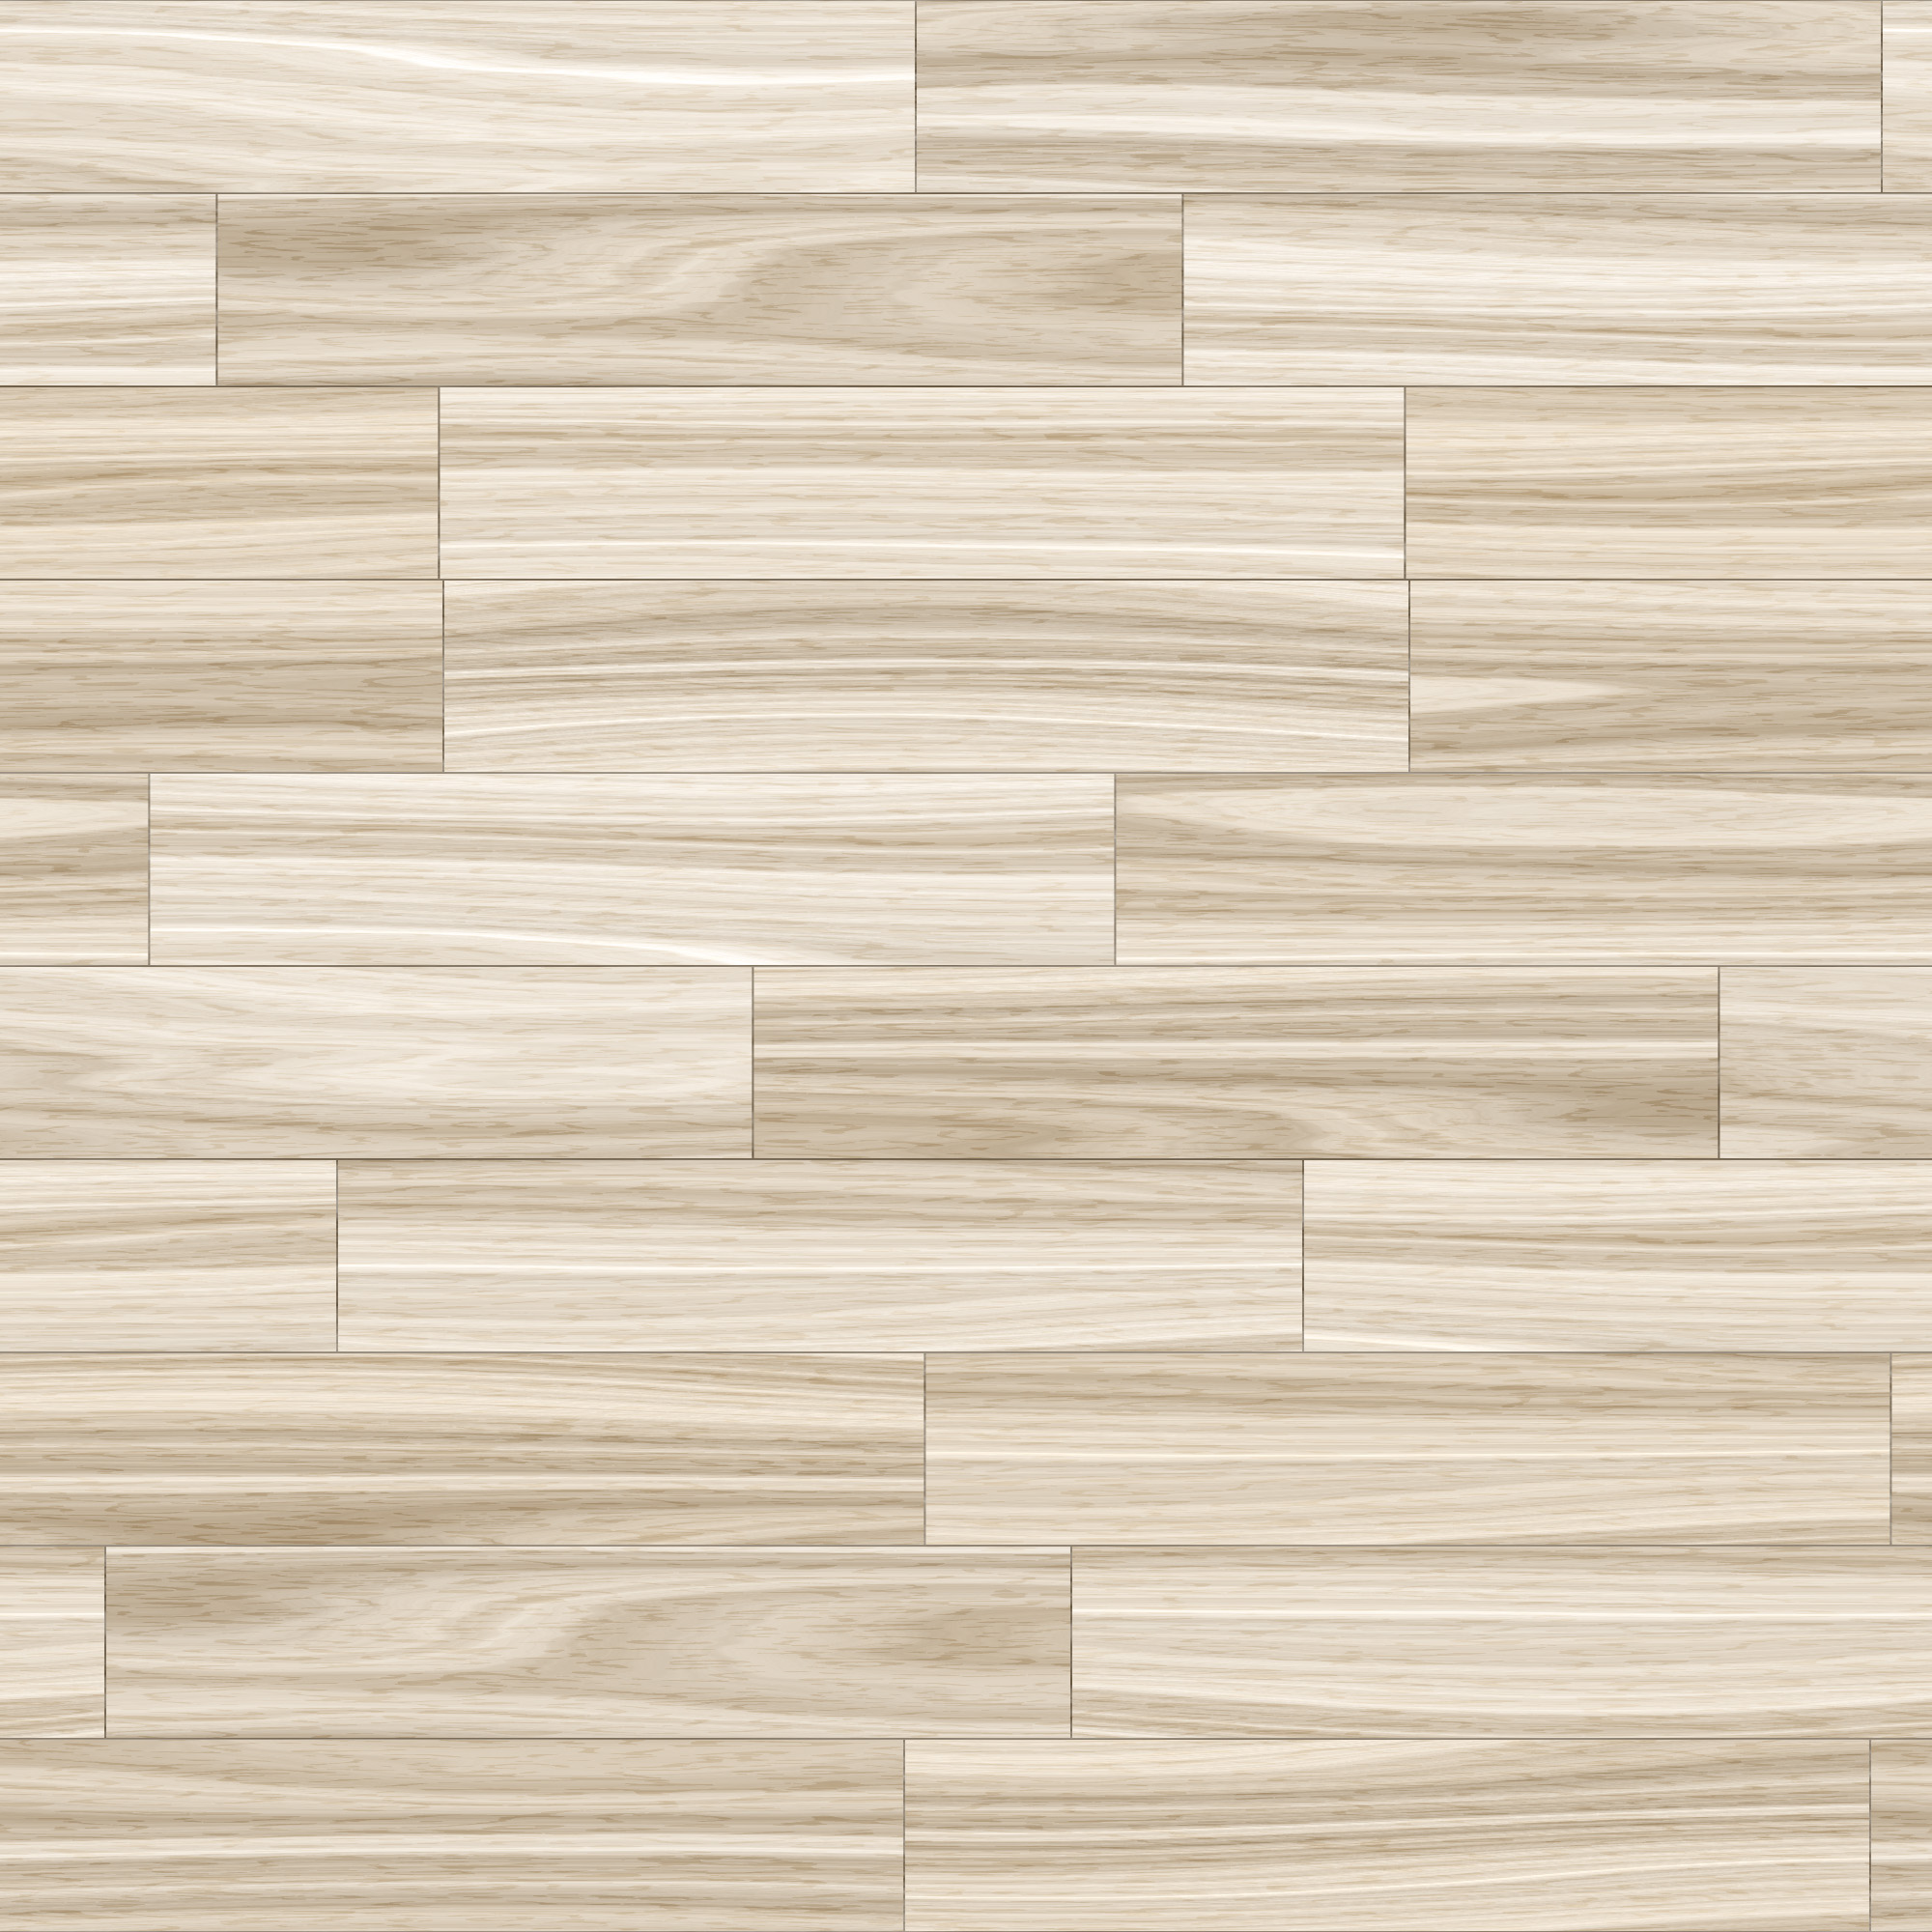 seamless wood texture pattern